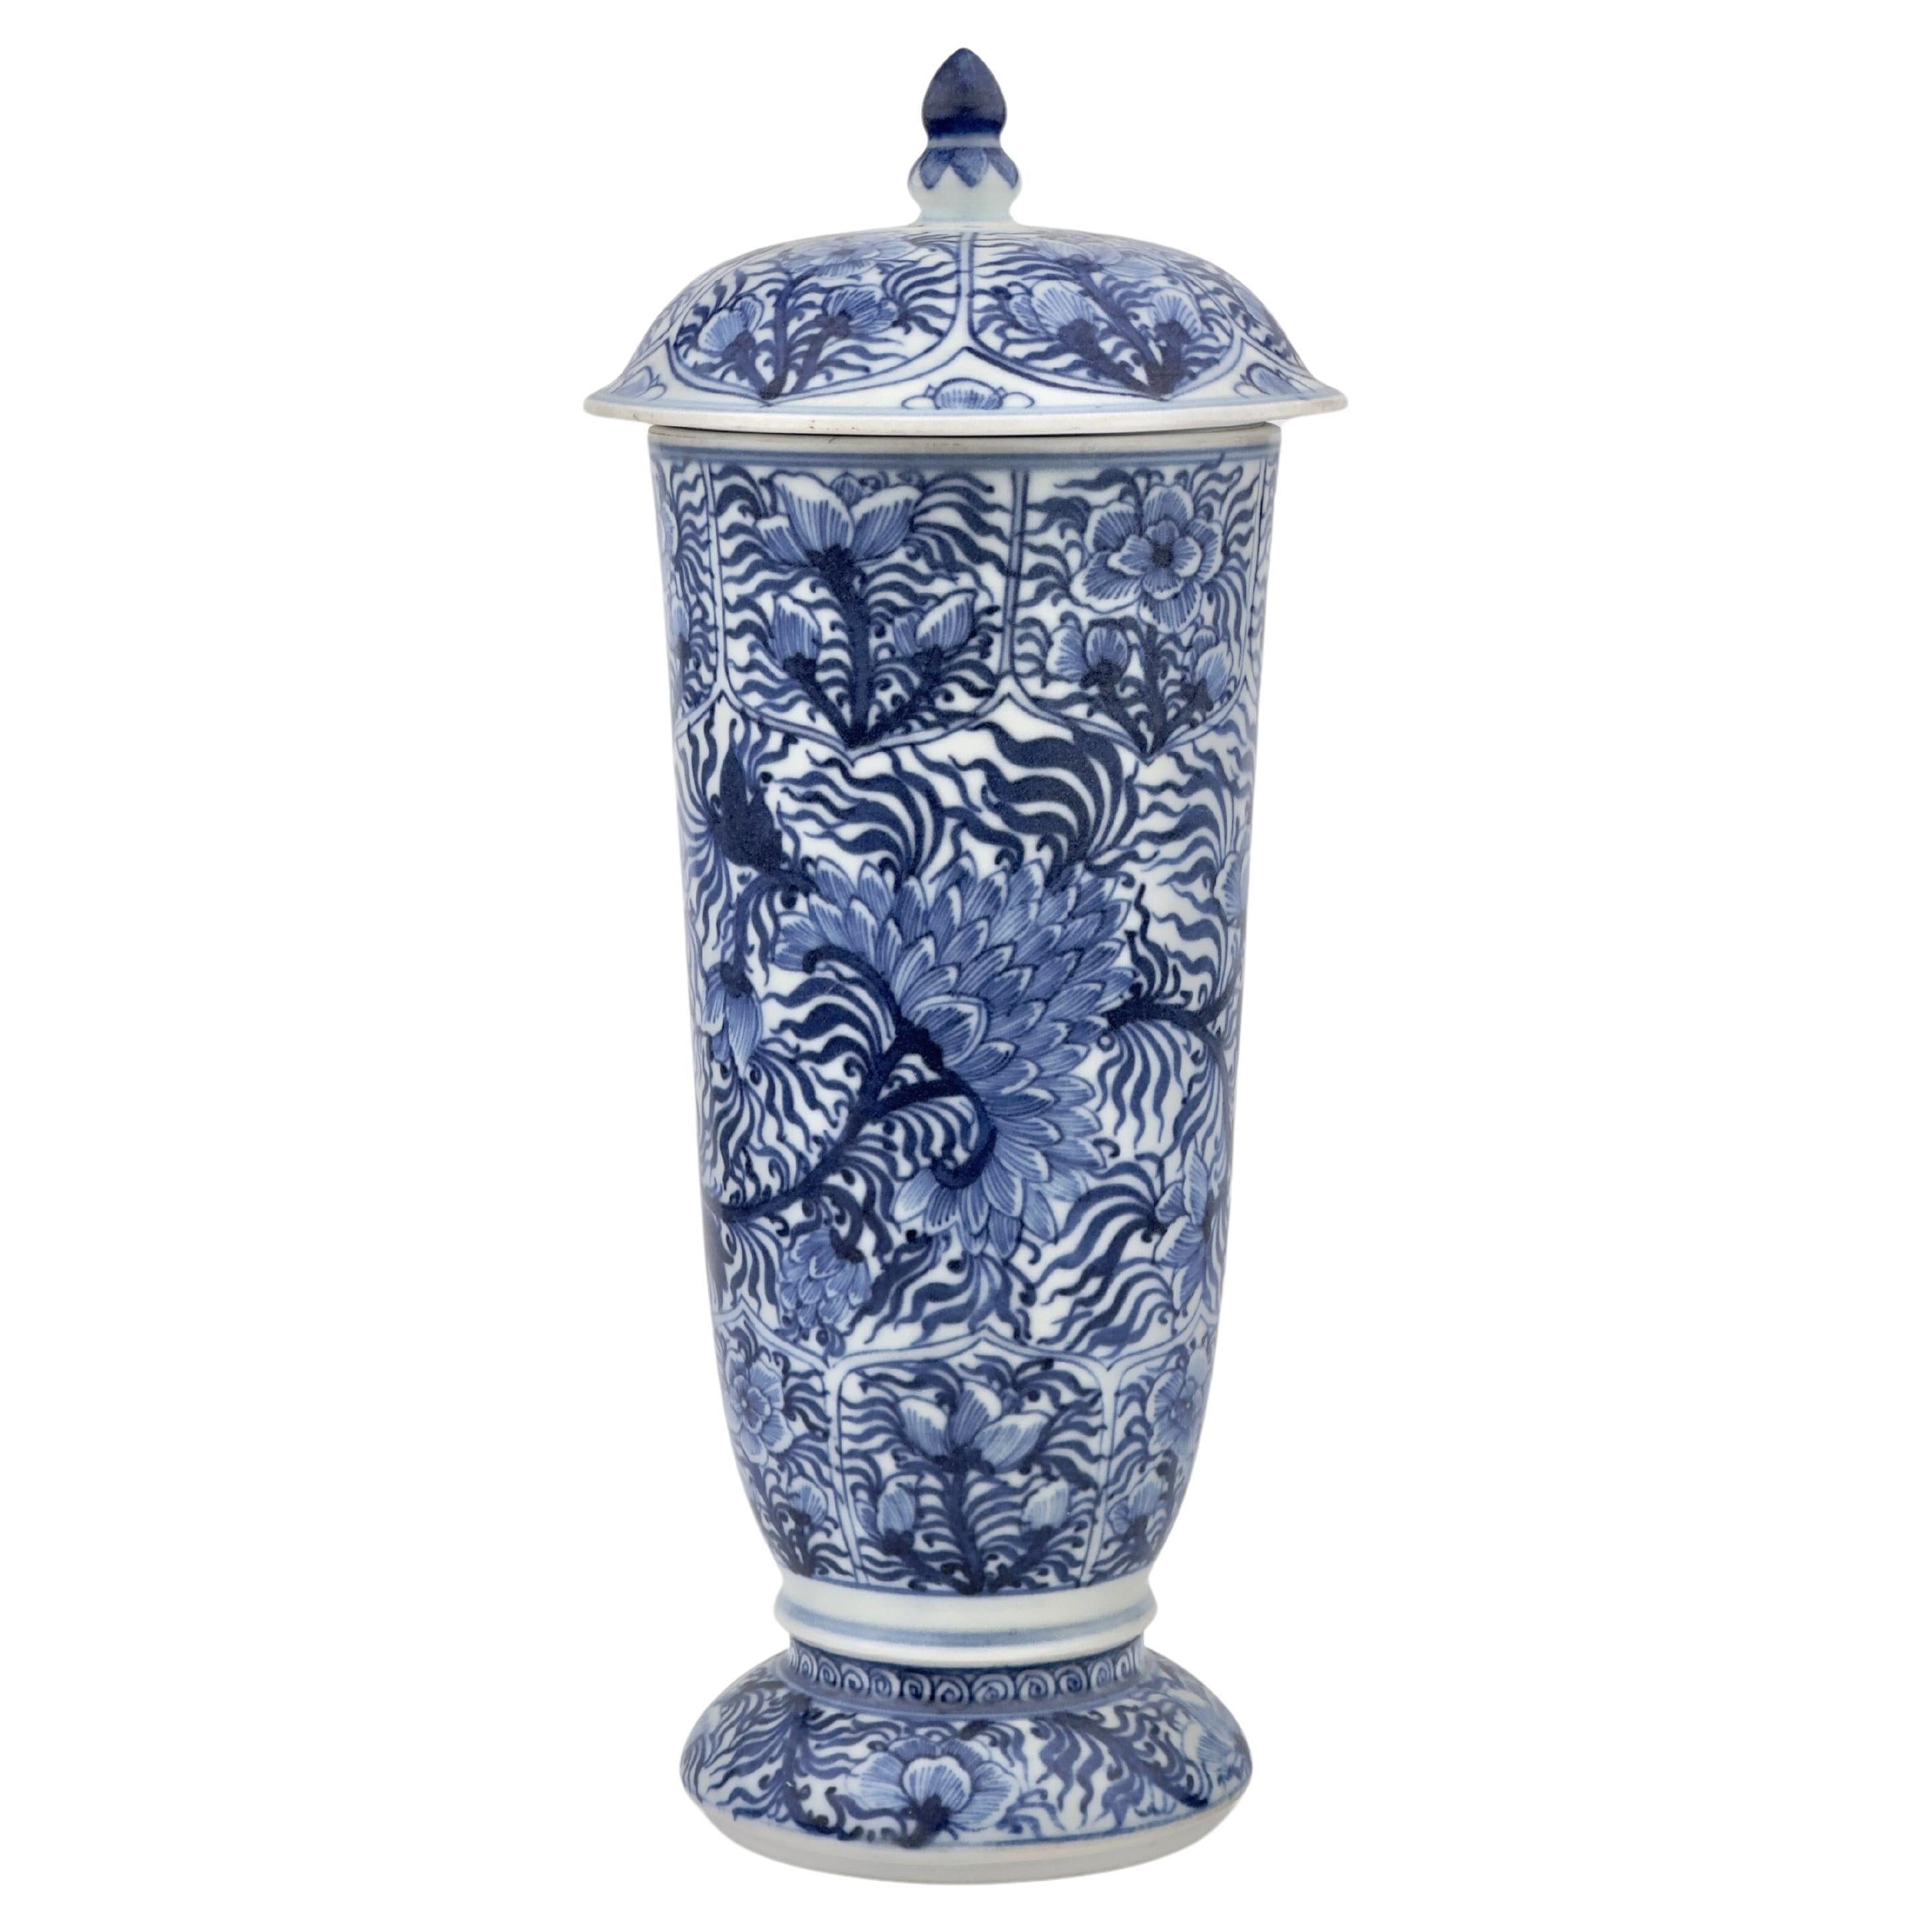 Blue and White Deep Beaker, Qing Dynasty, Kangxi era, circa 1690